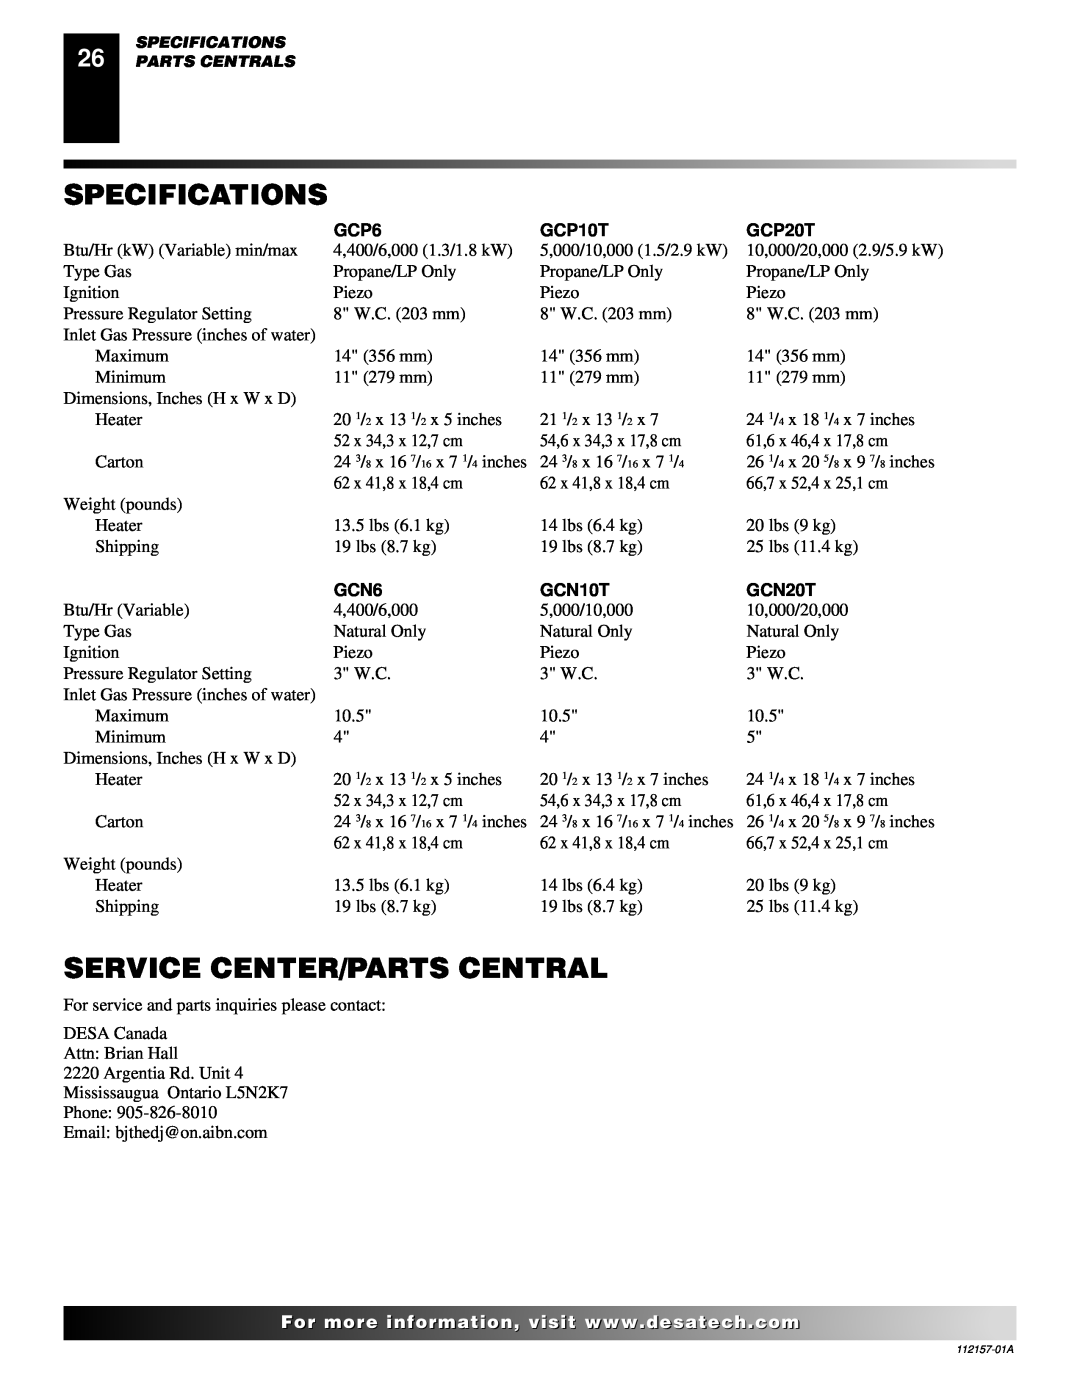 Desa GCN6, GCP6 GCN10T, GCP10TGCN20T installation manual Specifications, Service Center/Parts Central, GCP20T 